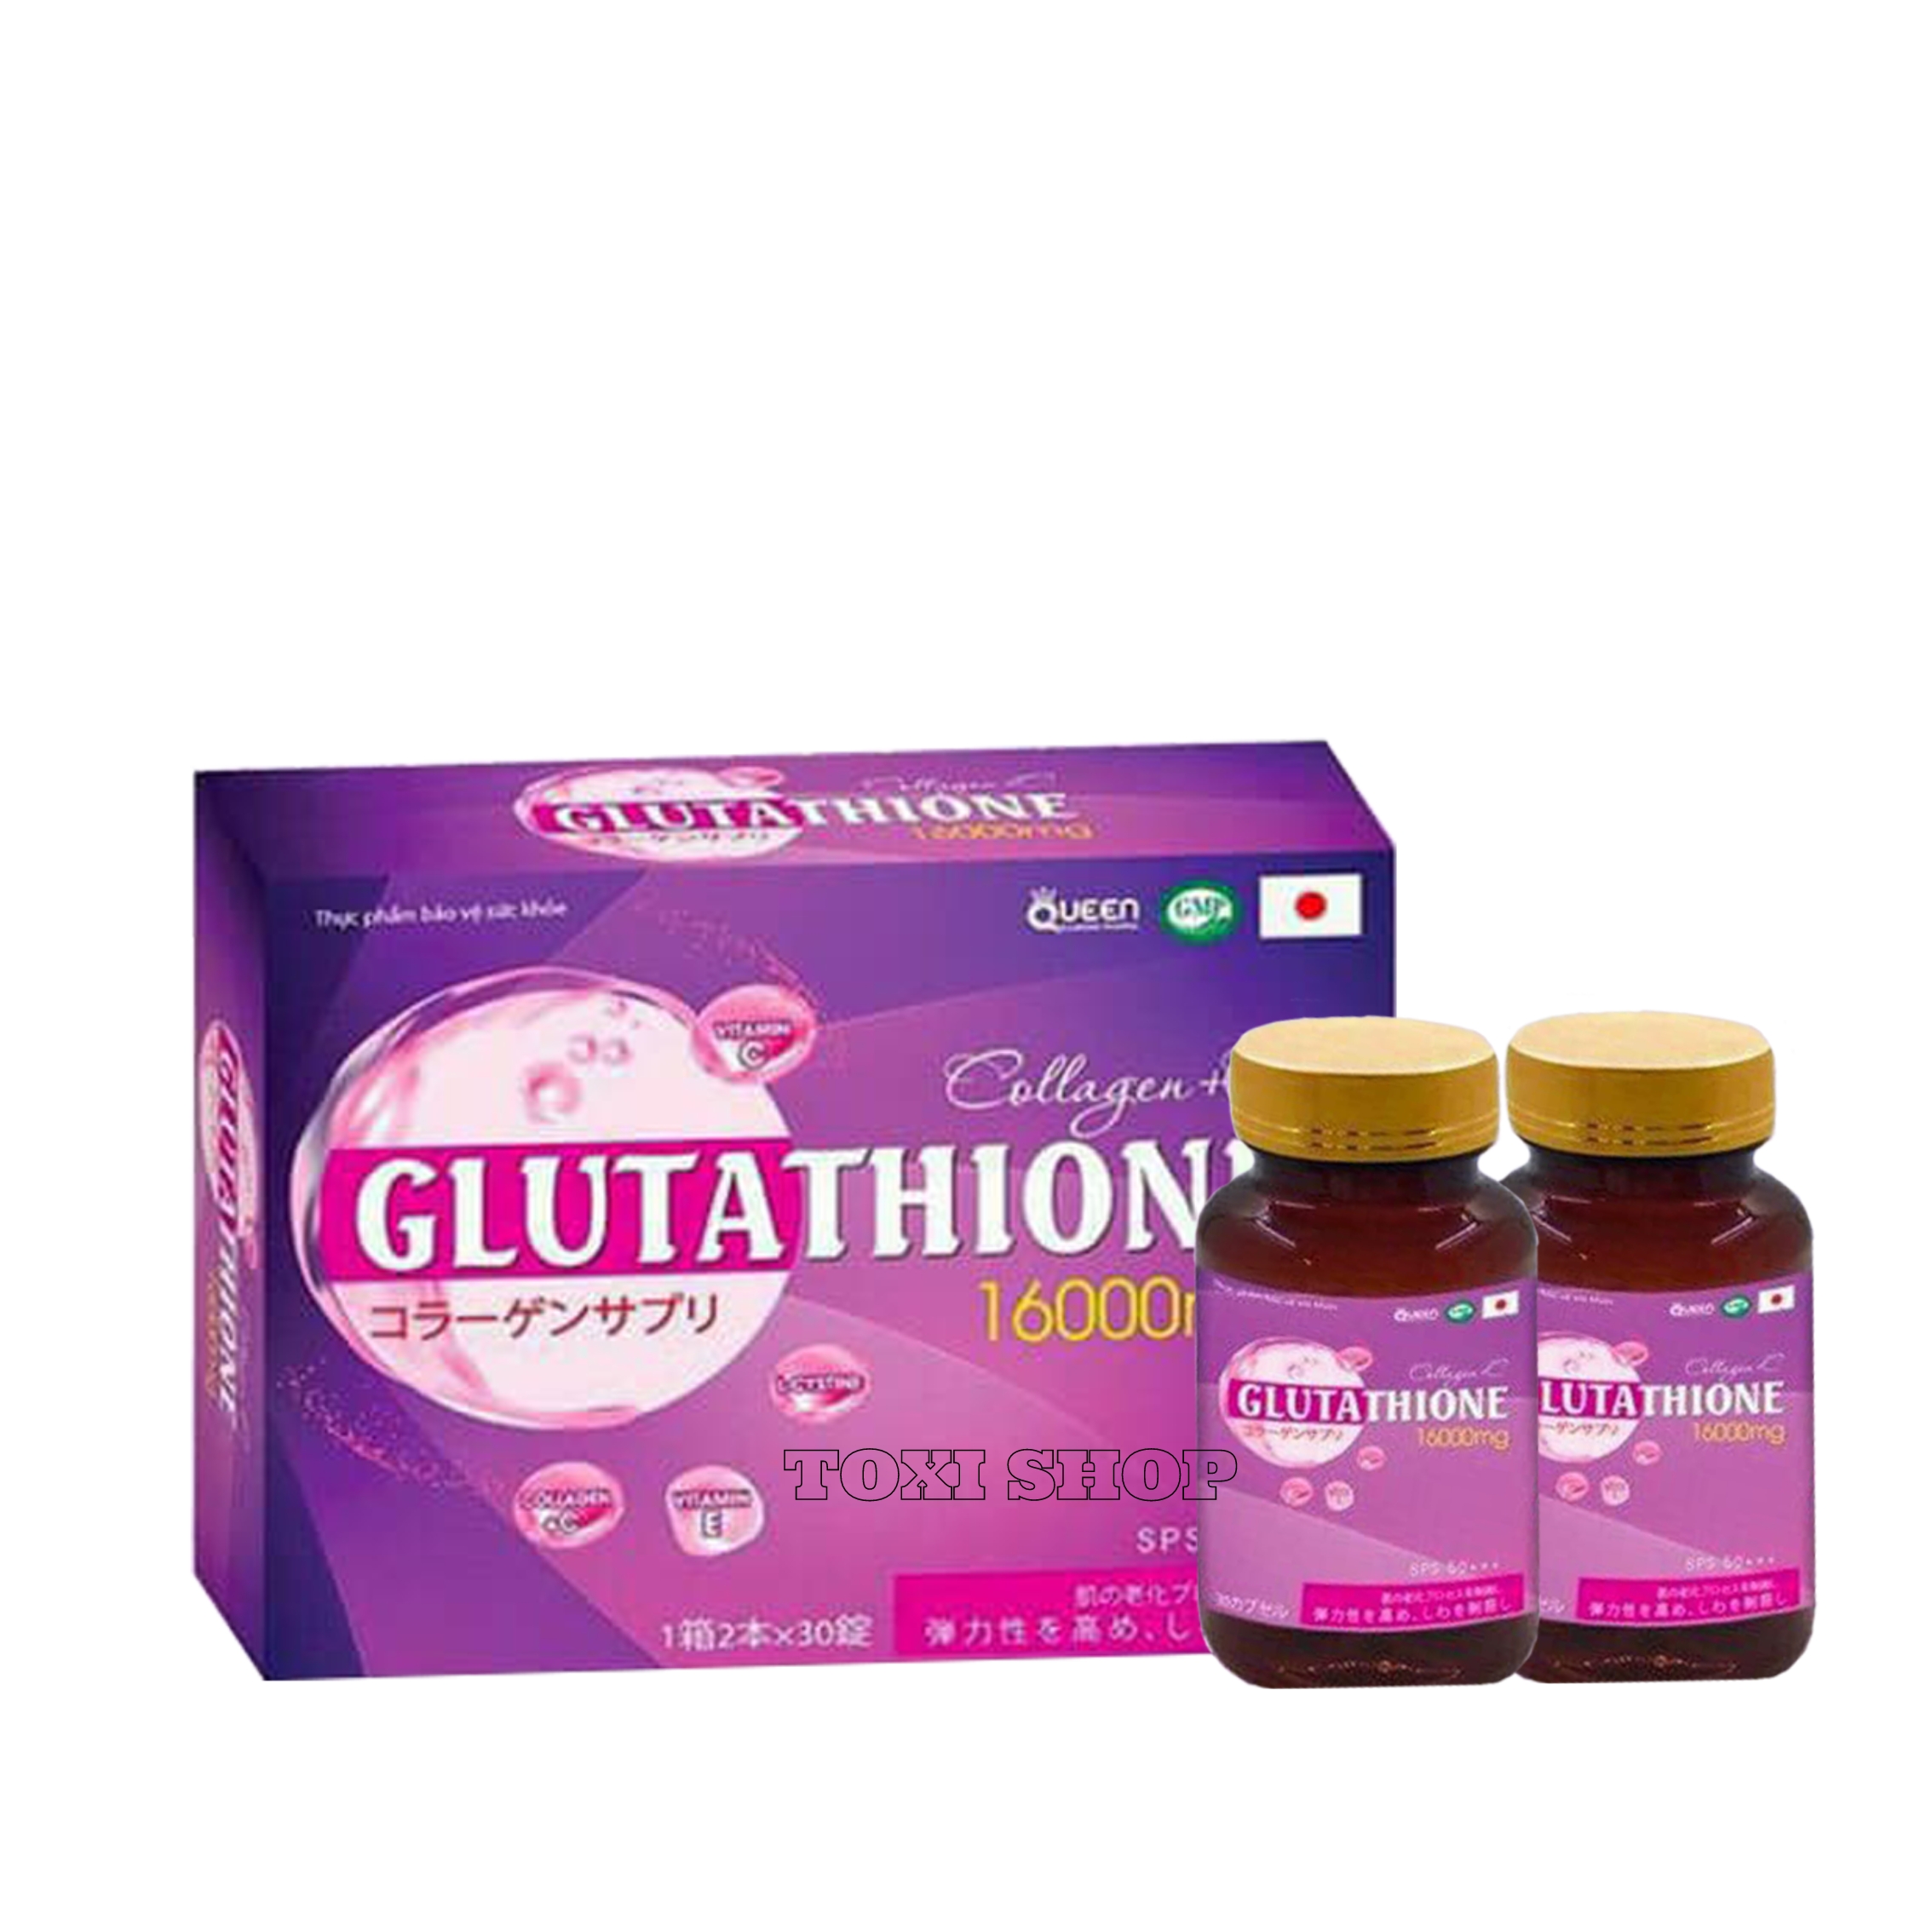 Glutathione 16000mg, Viên uống glutathione Collagen trắng da, nâng tone, giảm nám, thâm, sạm da, trắng da